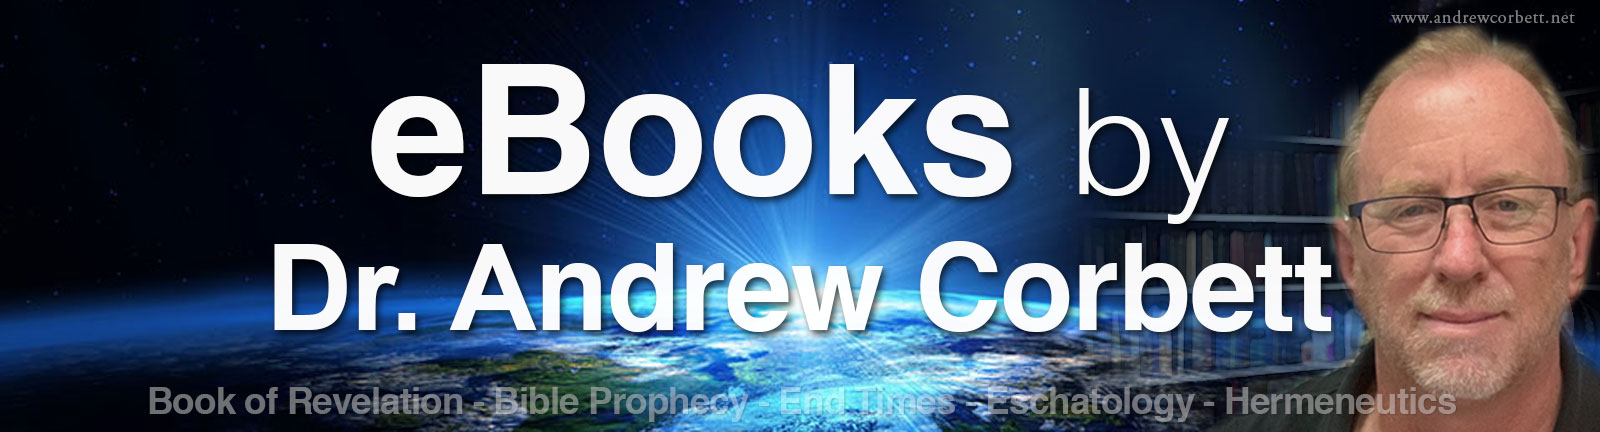 eBooks by Dr. Andrew Corbett